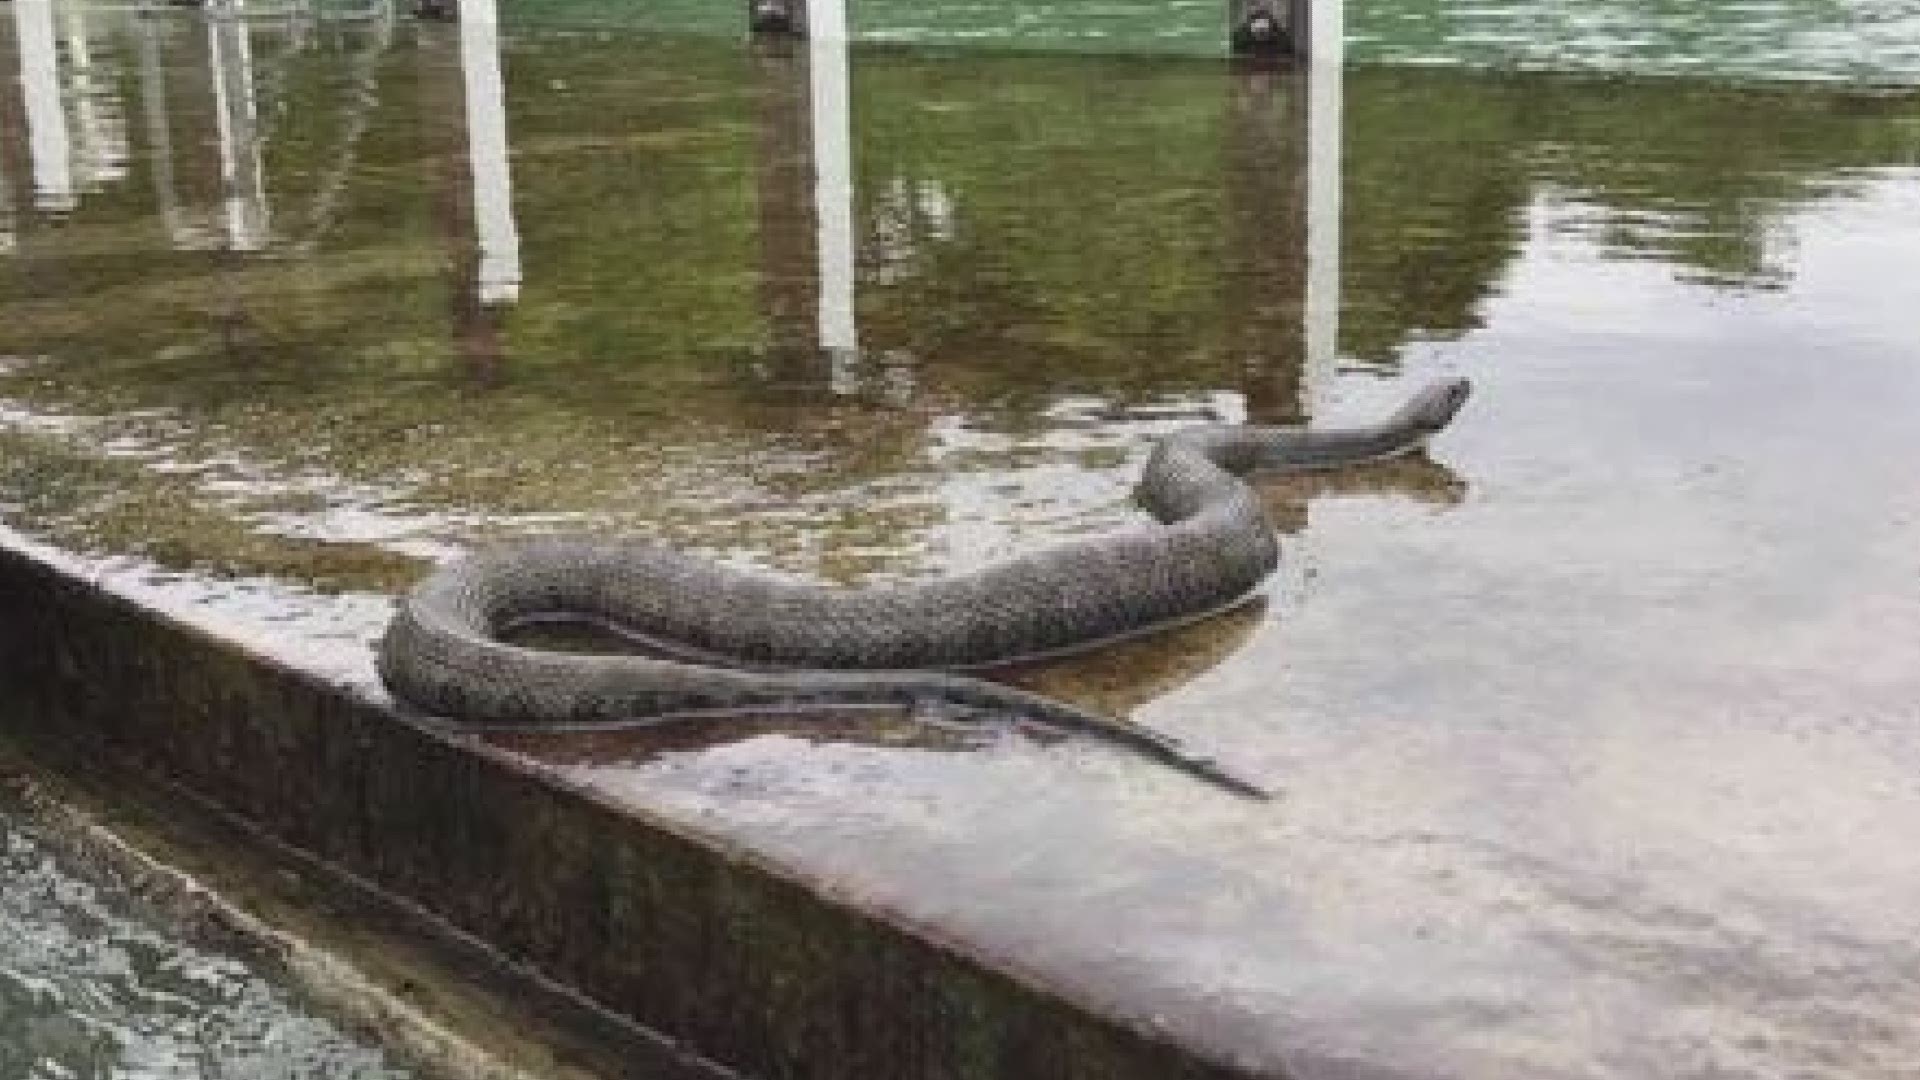 YIKES! Snake on Bay Village dock scares residents